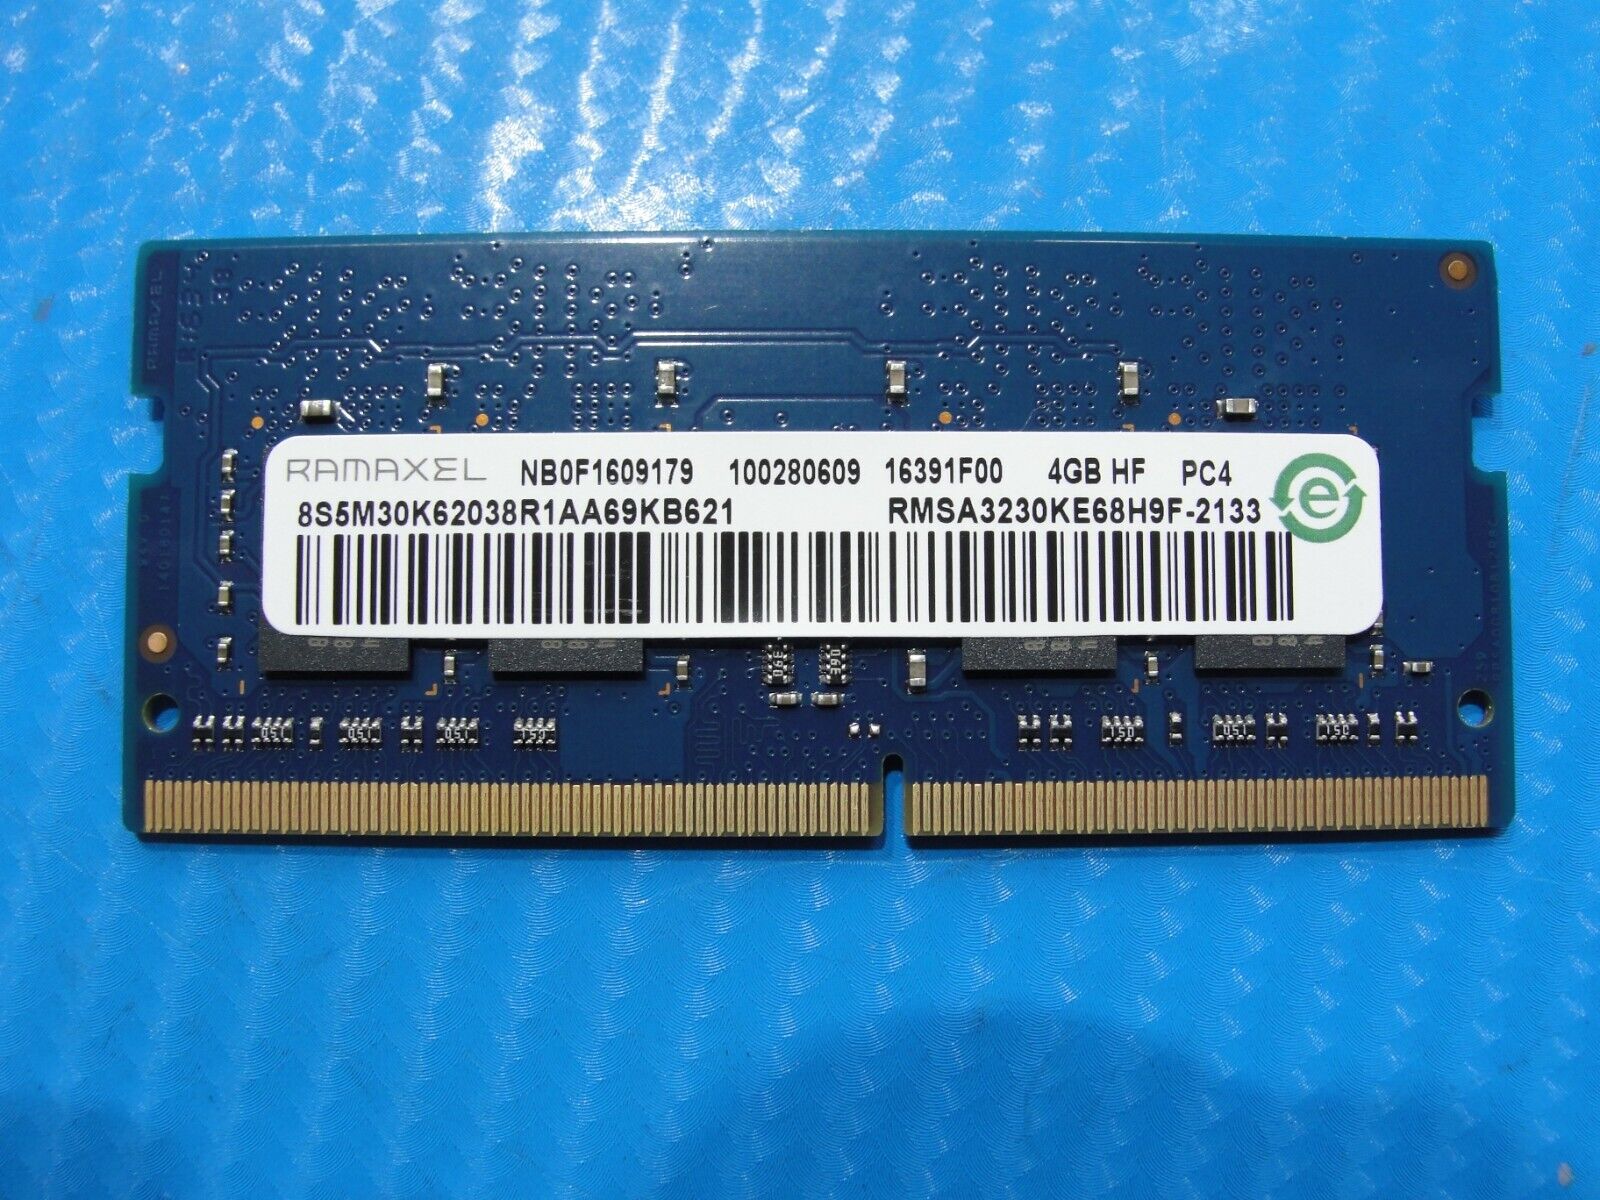 Lenovo 4-1470 Ramaxel 4GB SO-DIMM Memory RAM RMSA3230KE68H9F-2133 5M30K62038